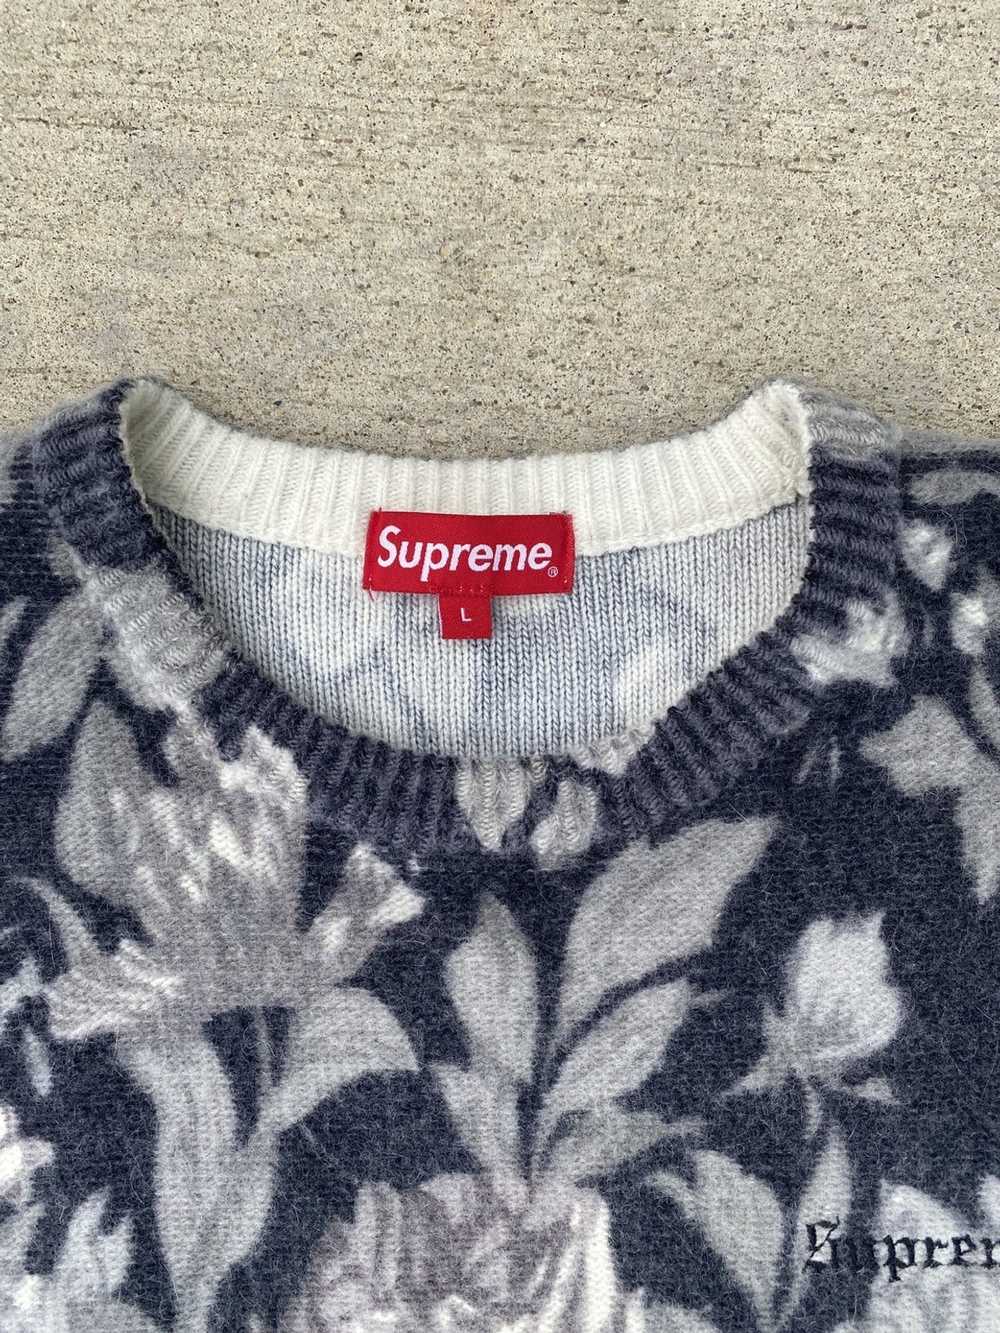 Supreme Supreme S/S 19 Angora Floral Sweater - image 2